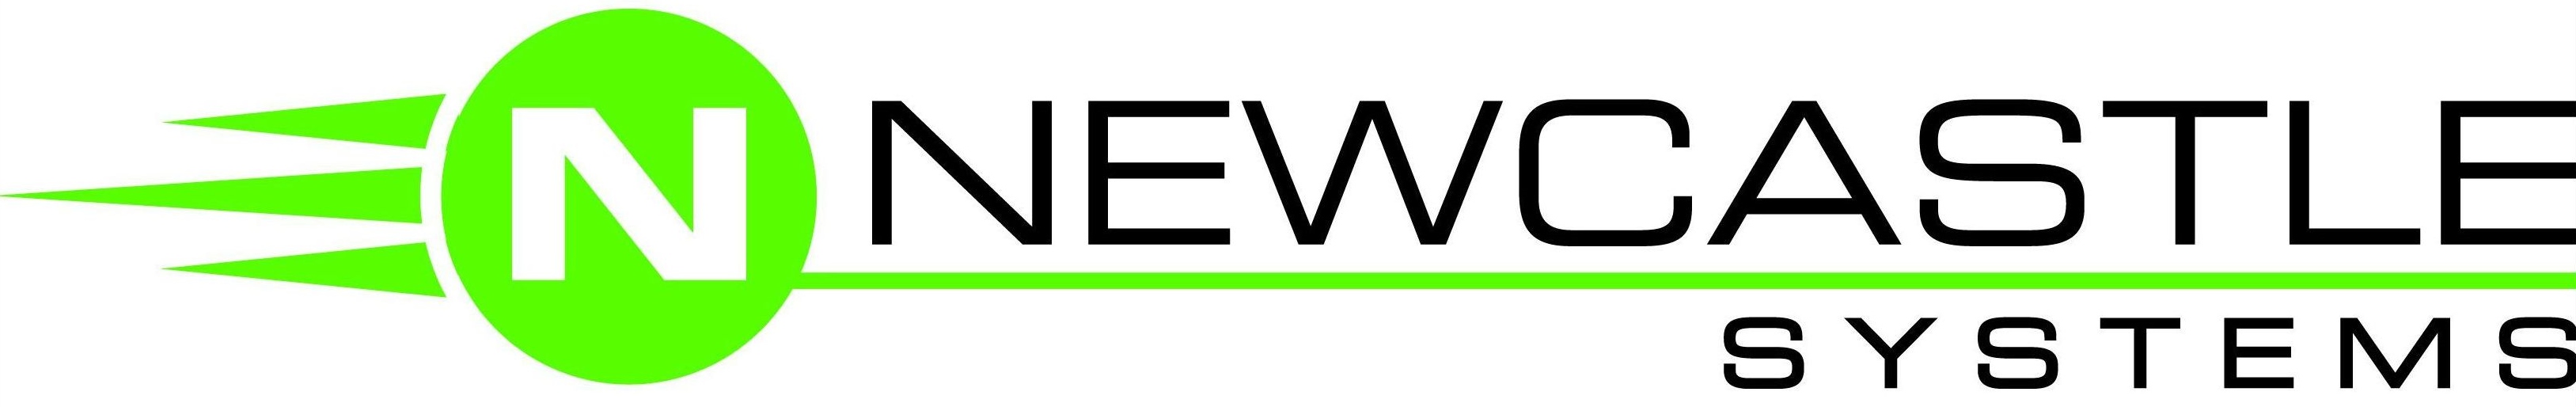 newcastle-systems-logo